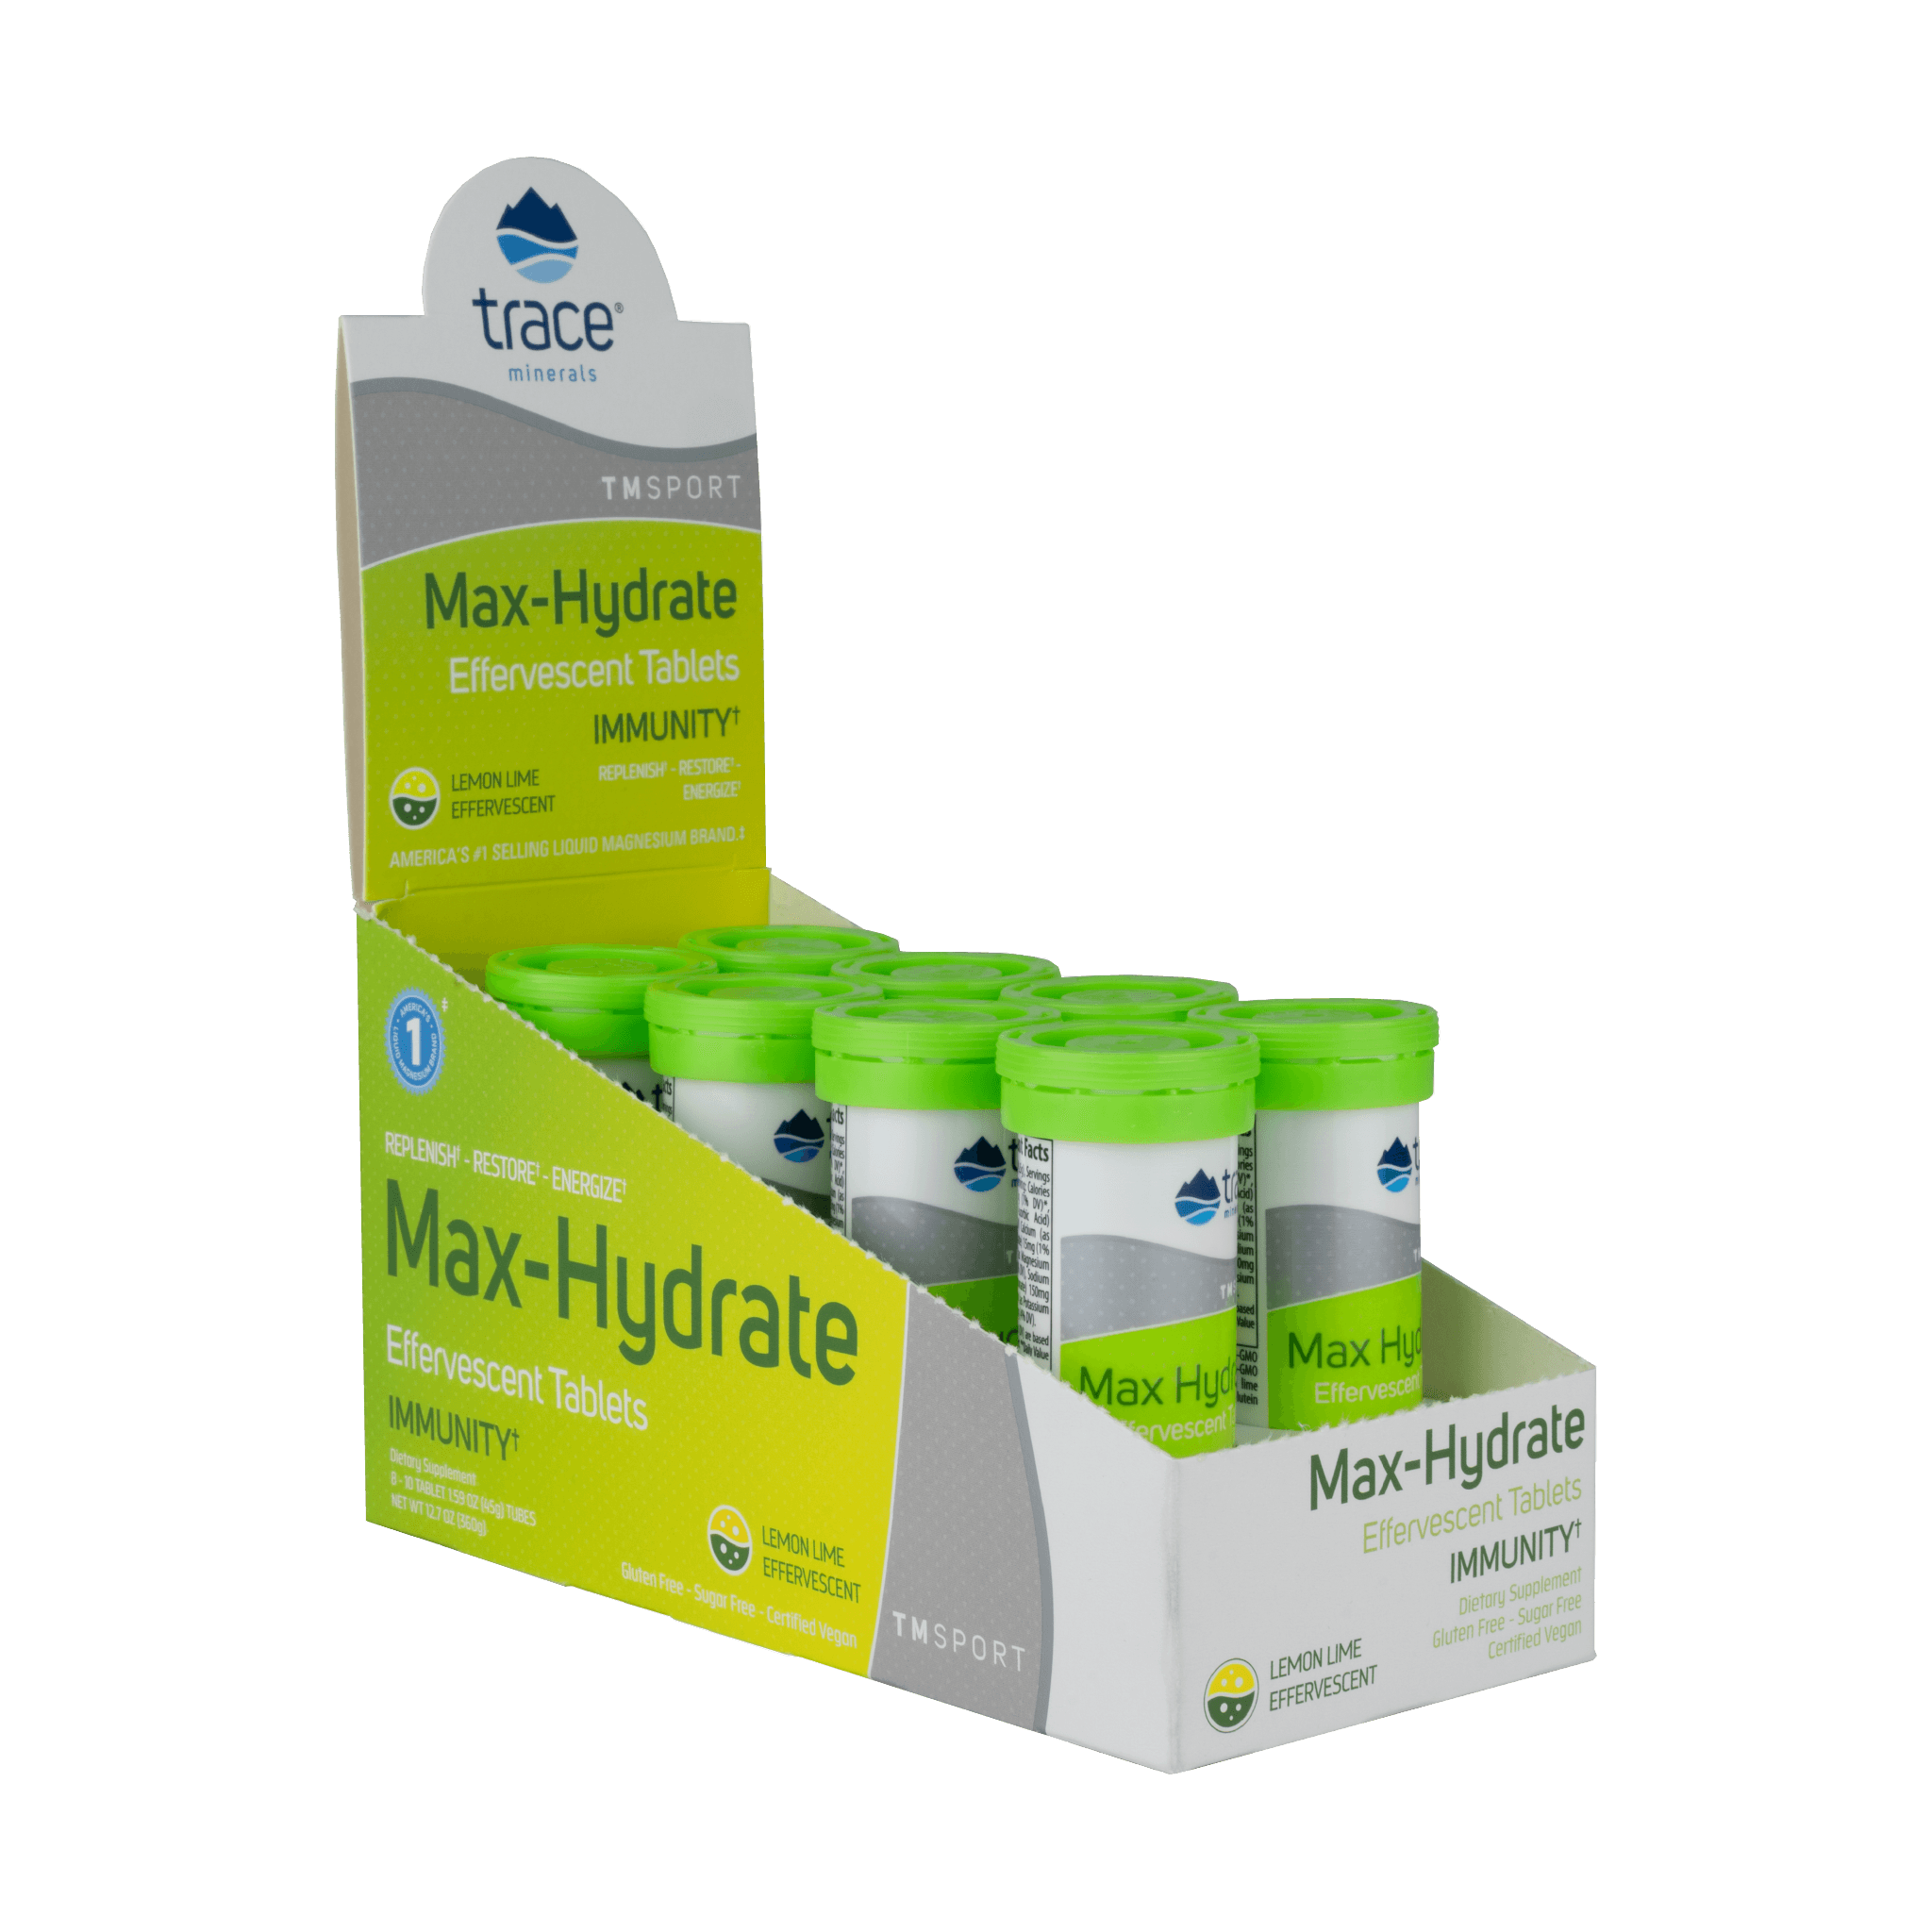 Max-Hydrate Immunity - Trace Minerals